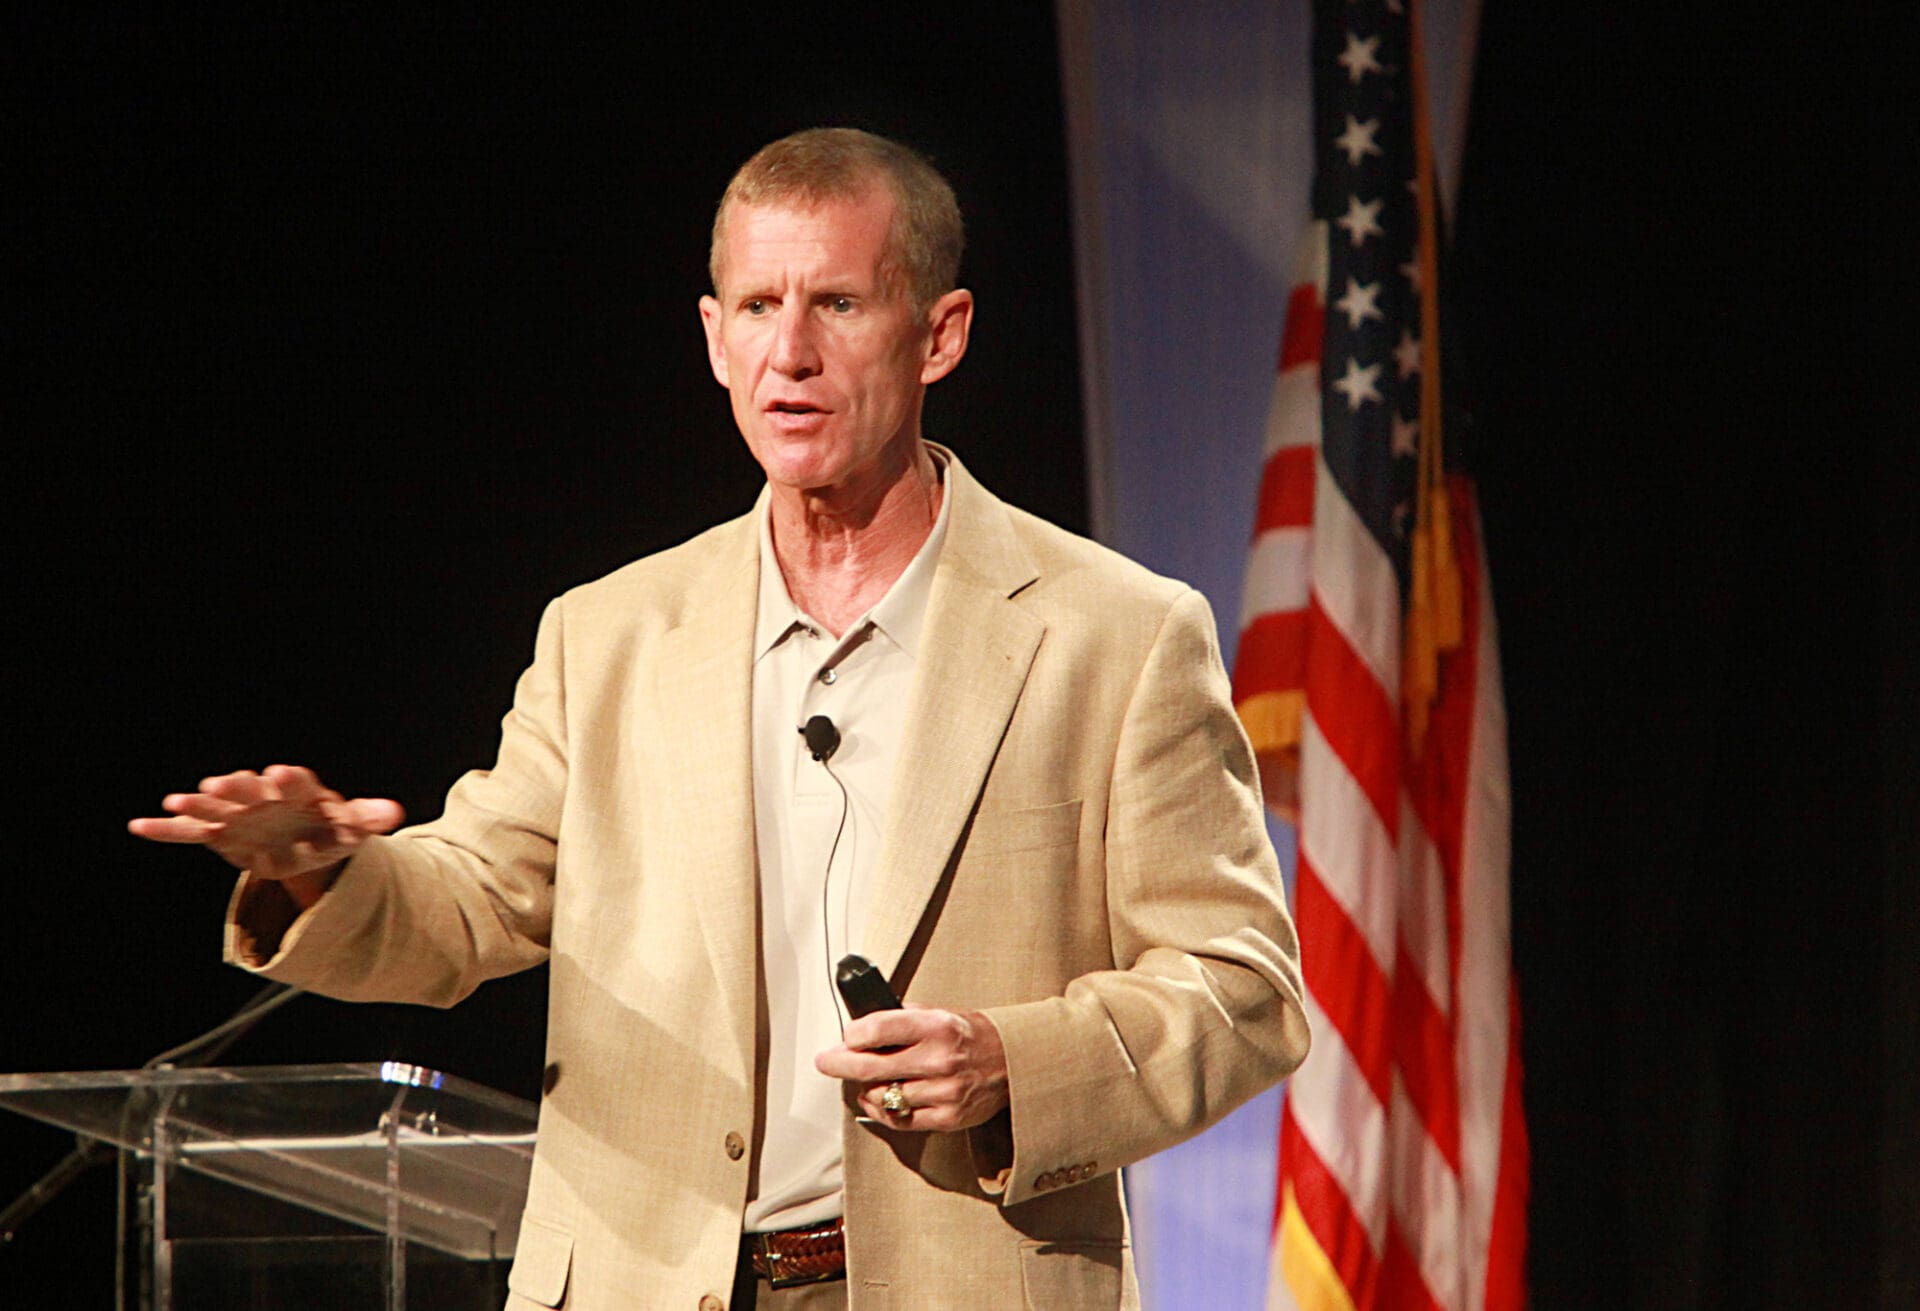 Ret Gen Stanley McChrystal wants more gun control laws in the US